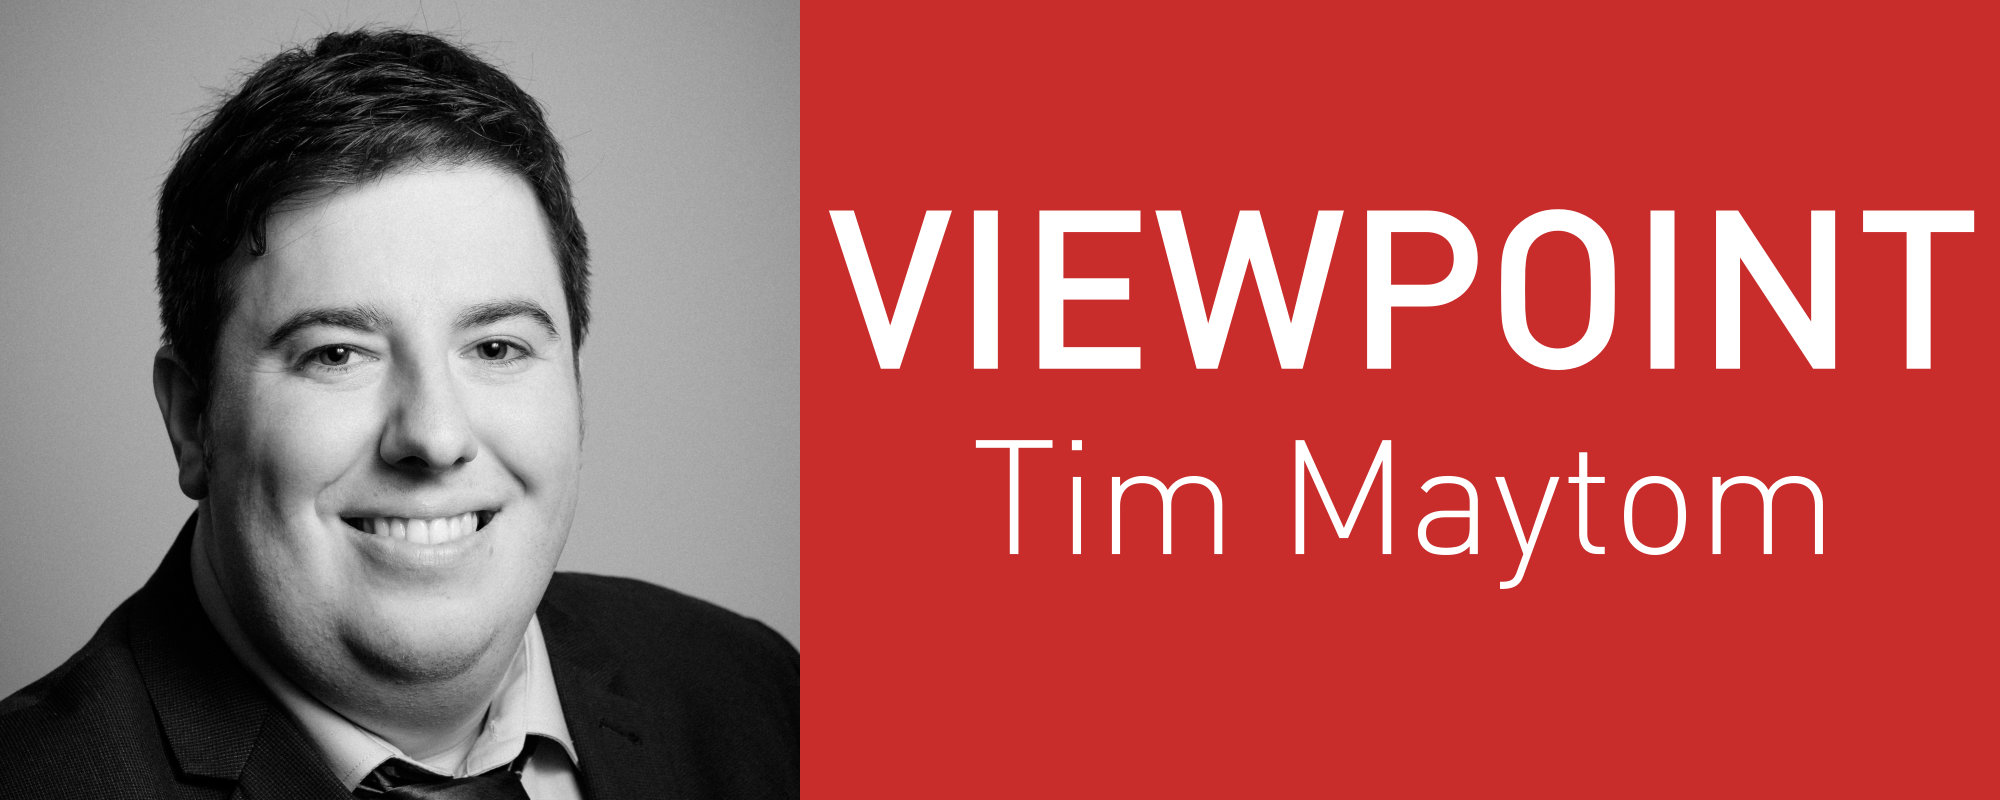 Tim Maytom Viewpoint